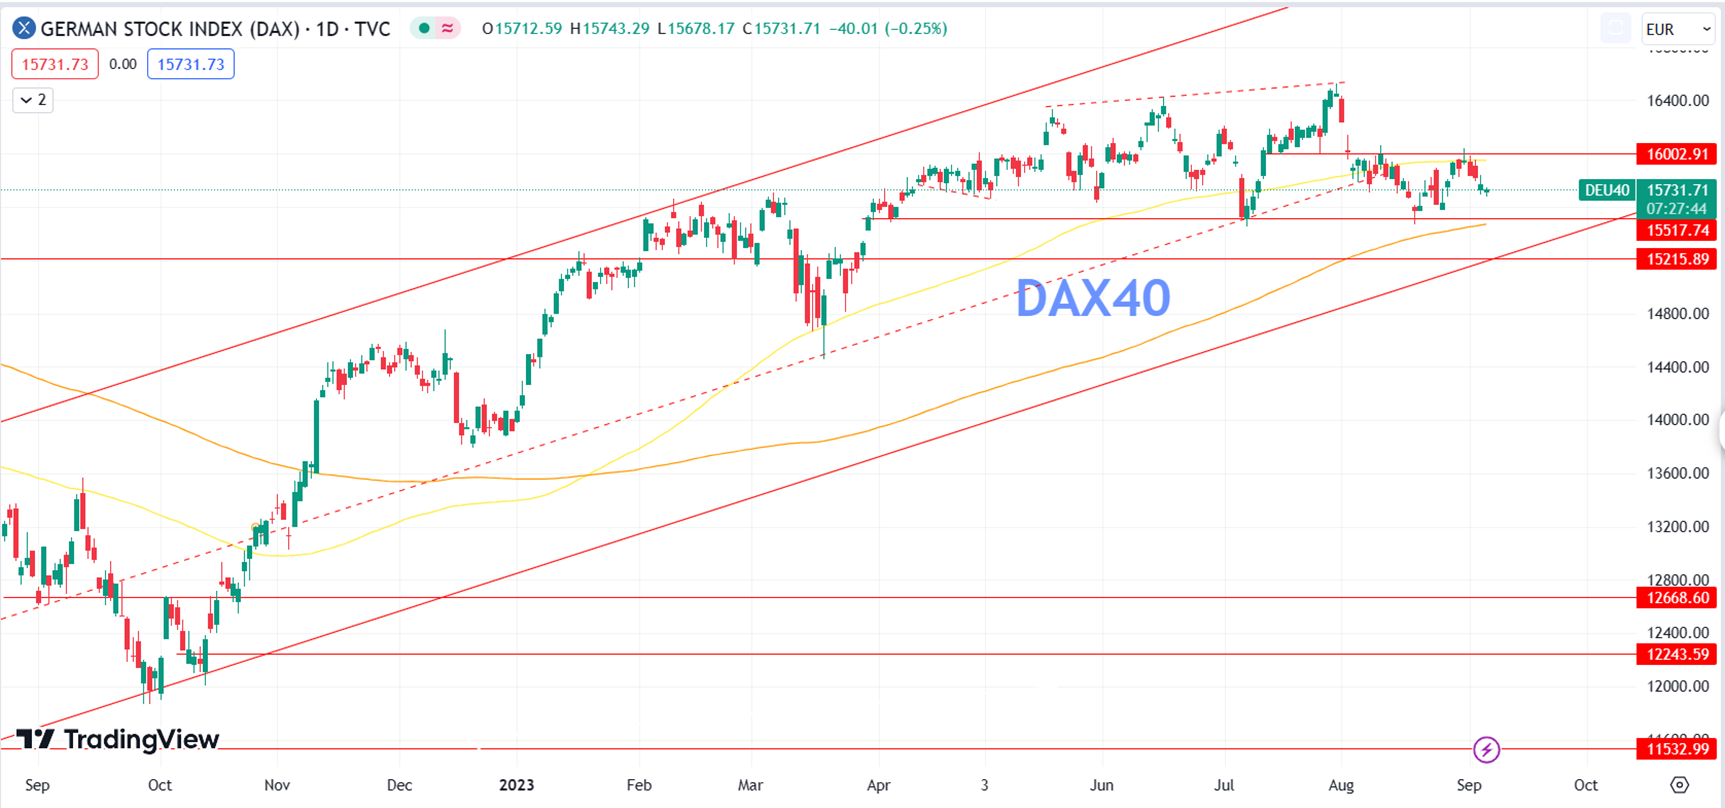 Daily Analysis DAX40 - 6 Sep 2023